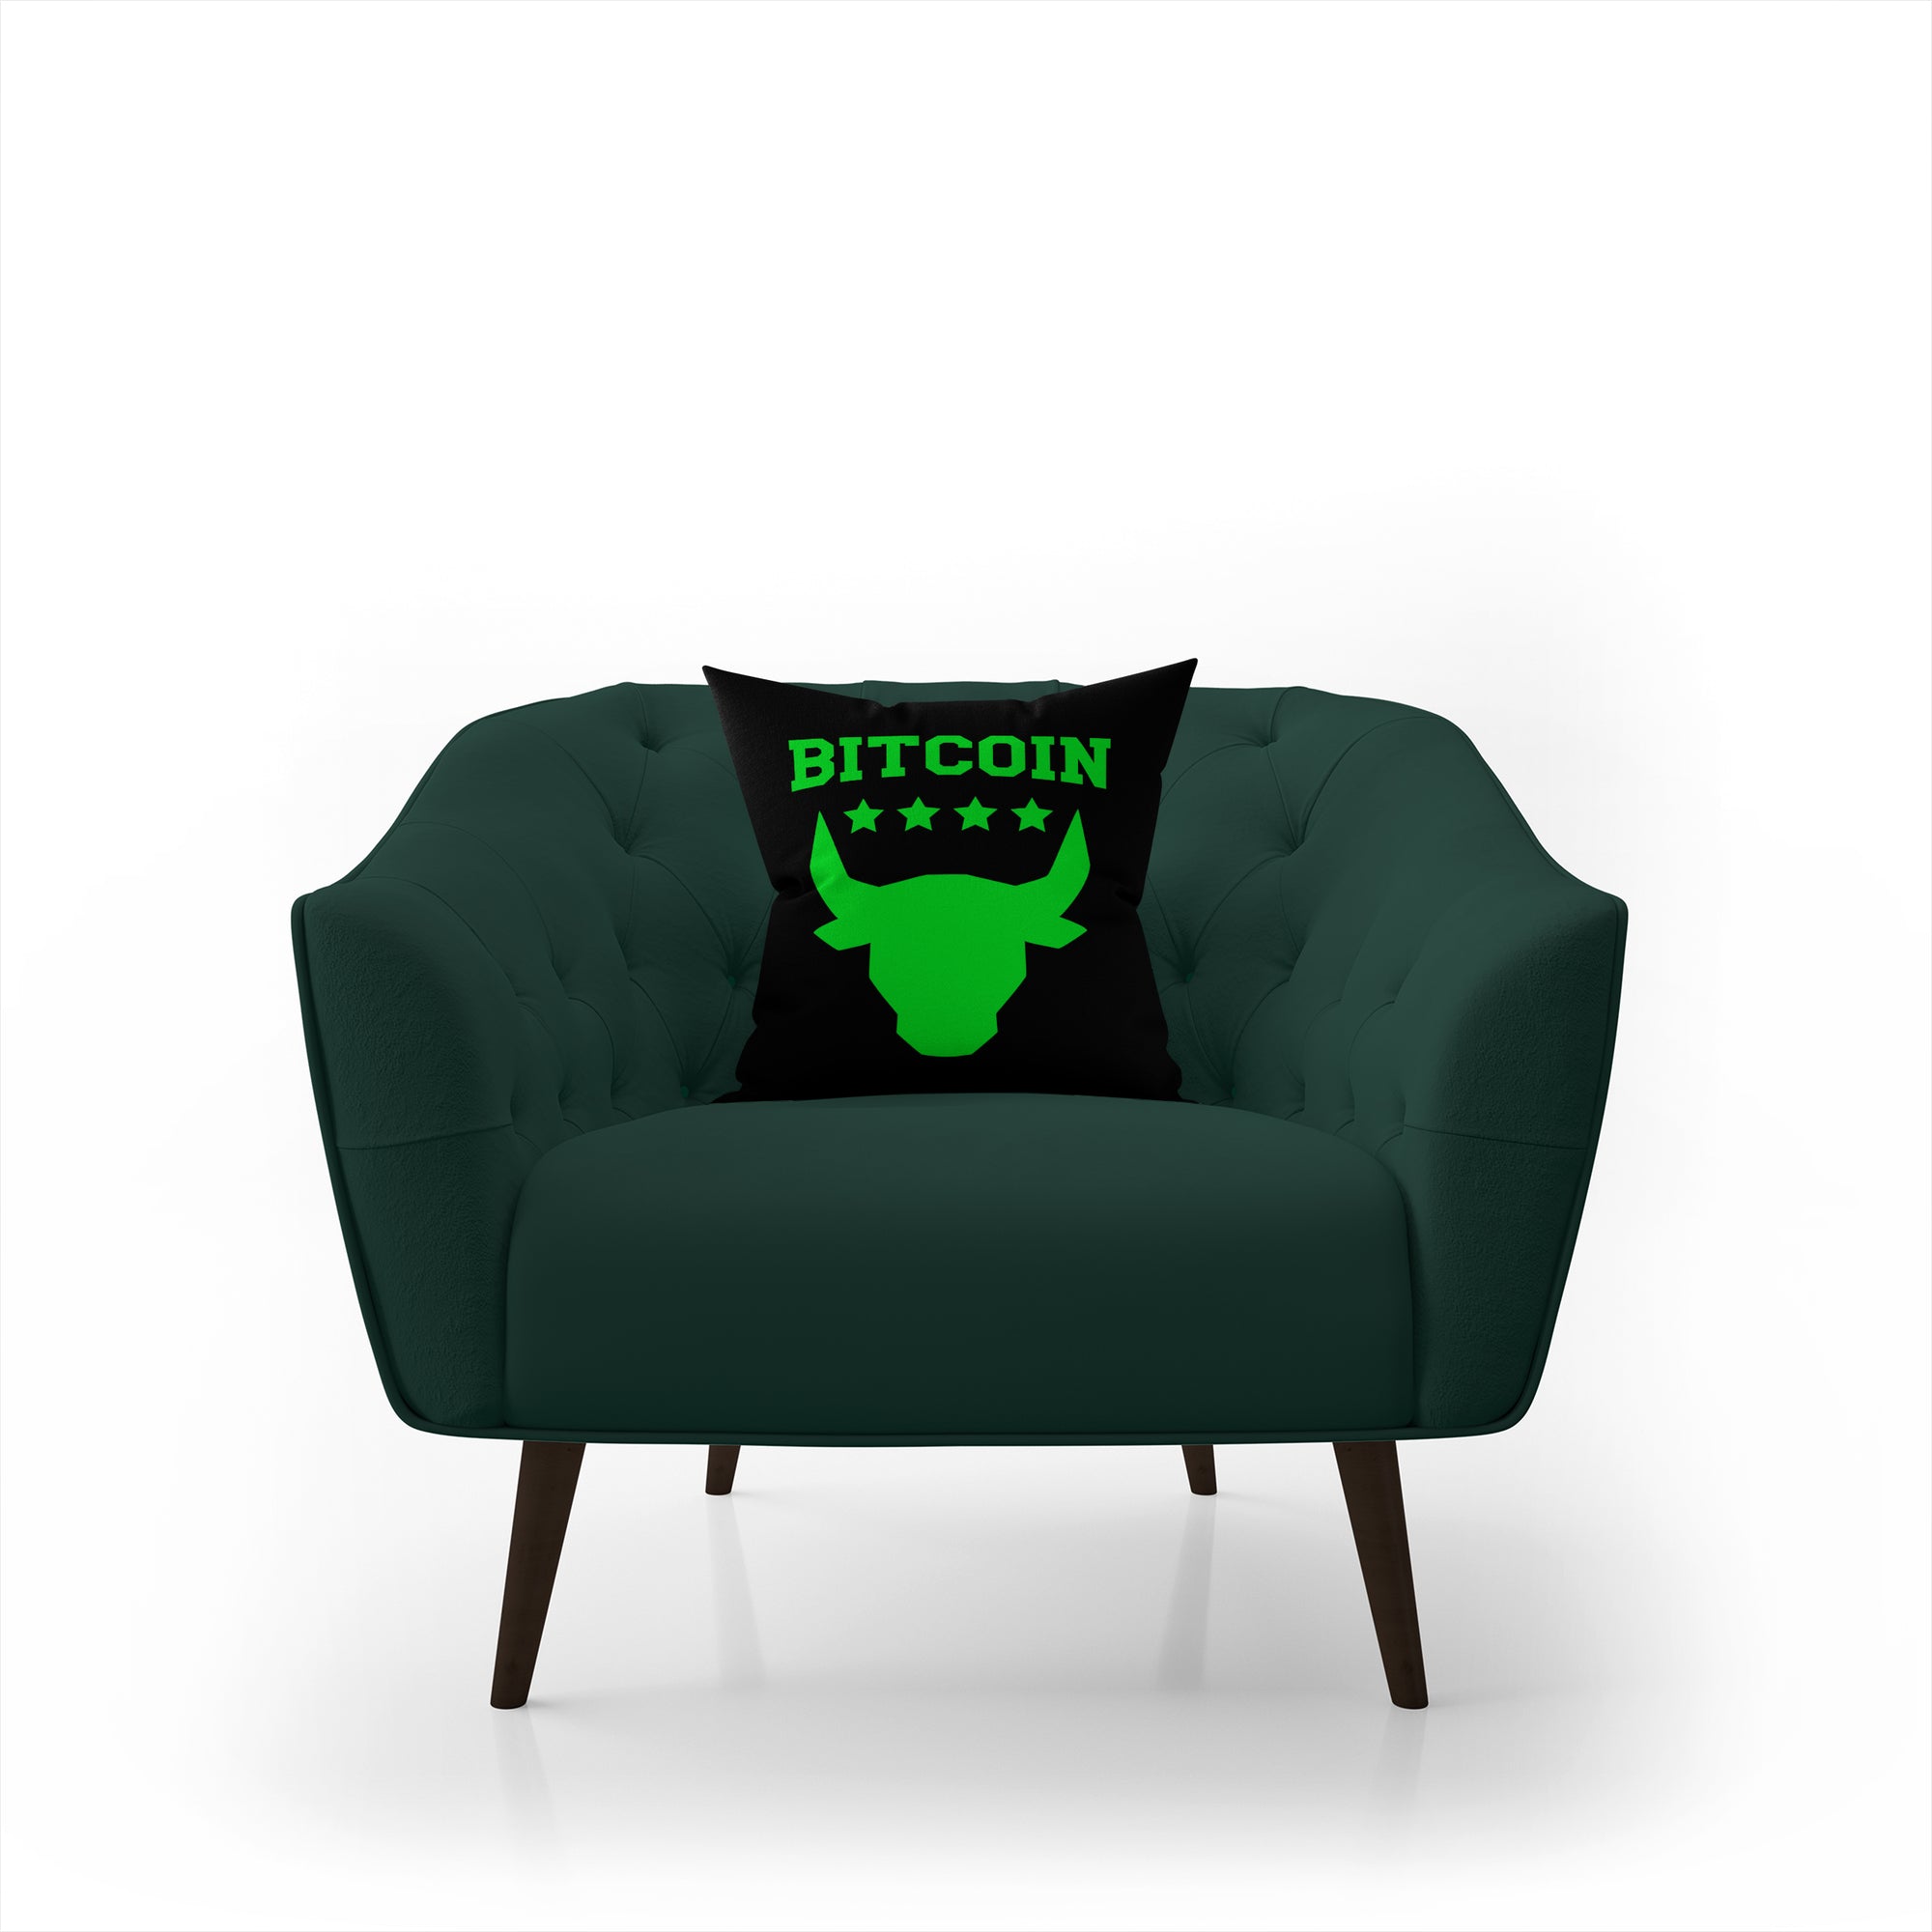 Bitcoin Merchandise - Bitcoin Bull Pillow displayed on green armchair.